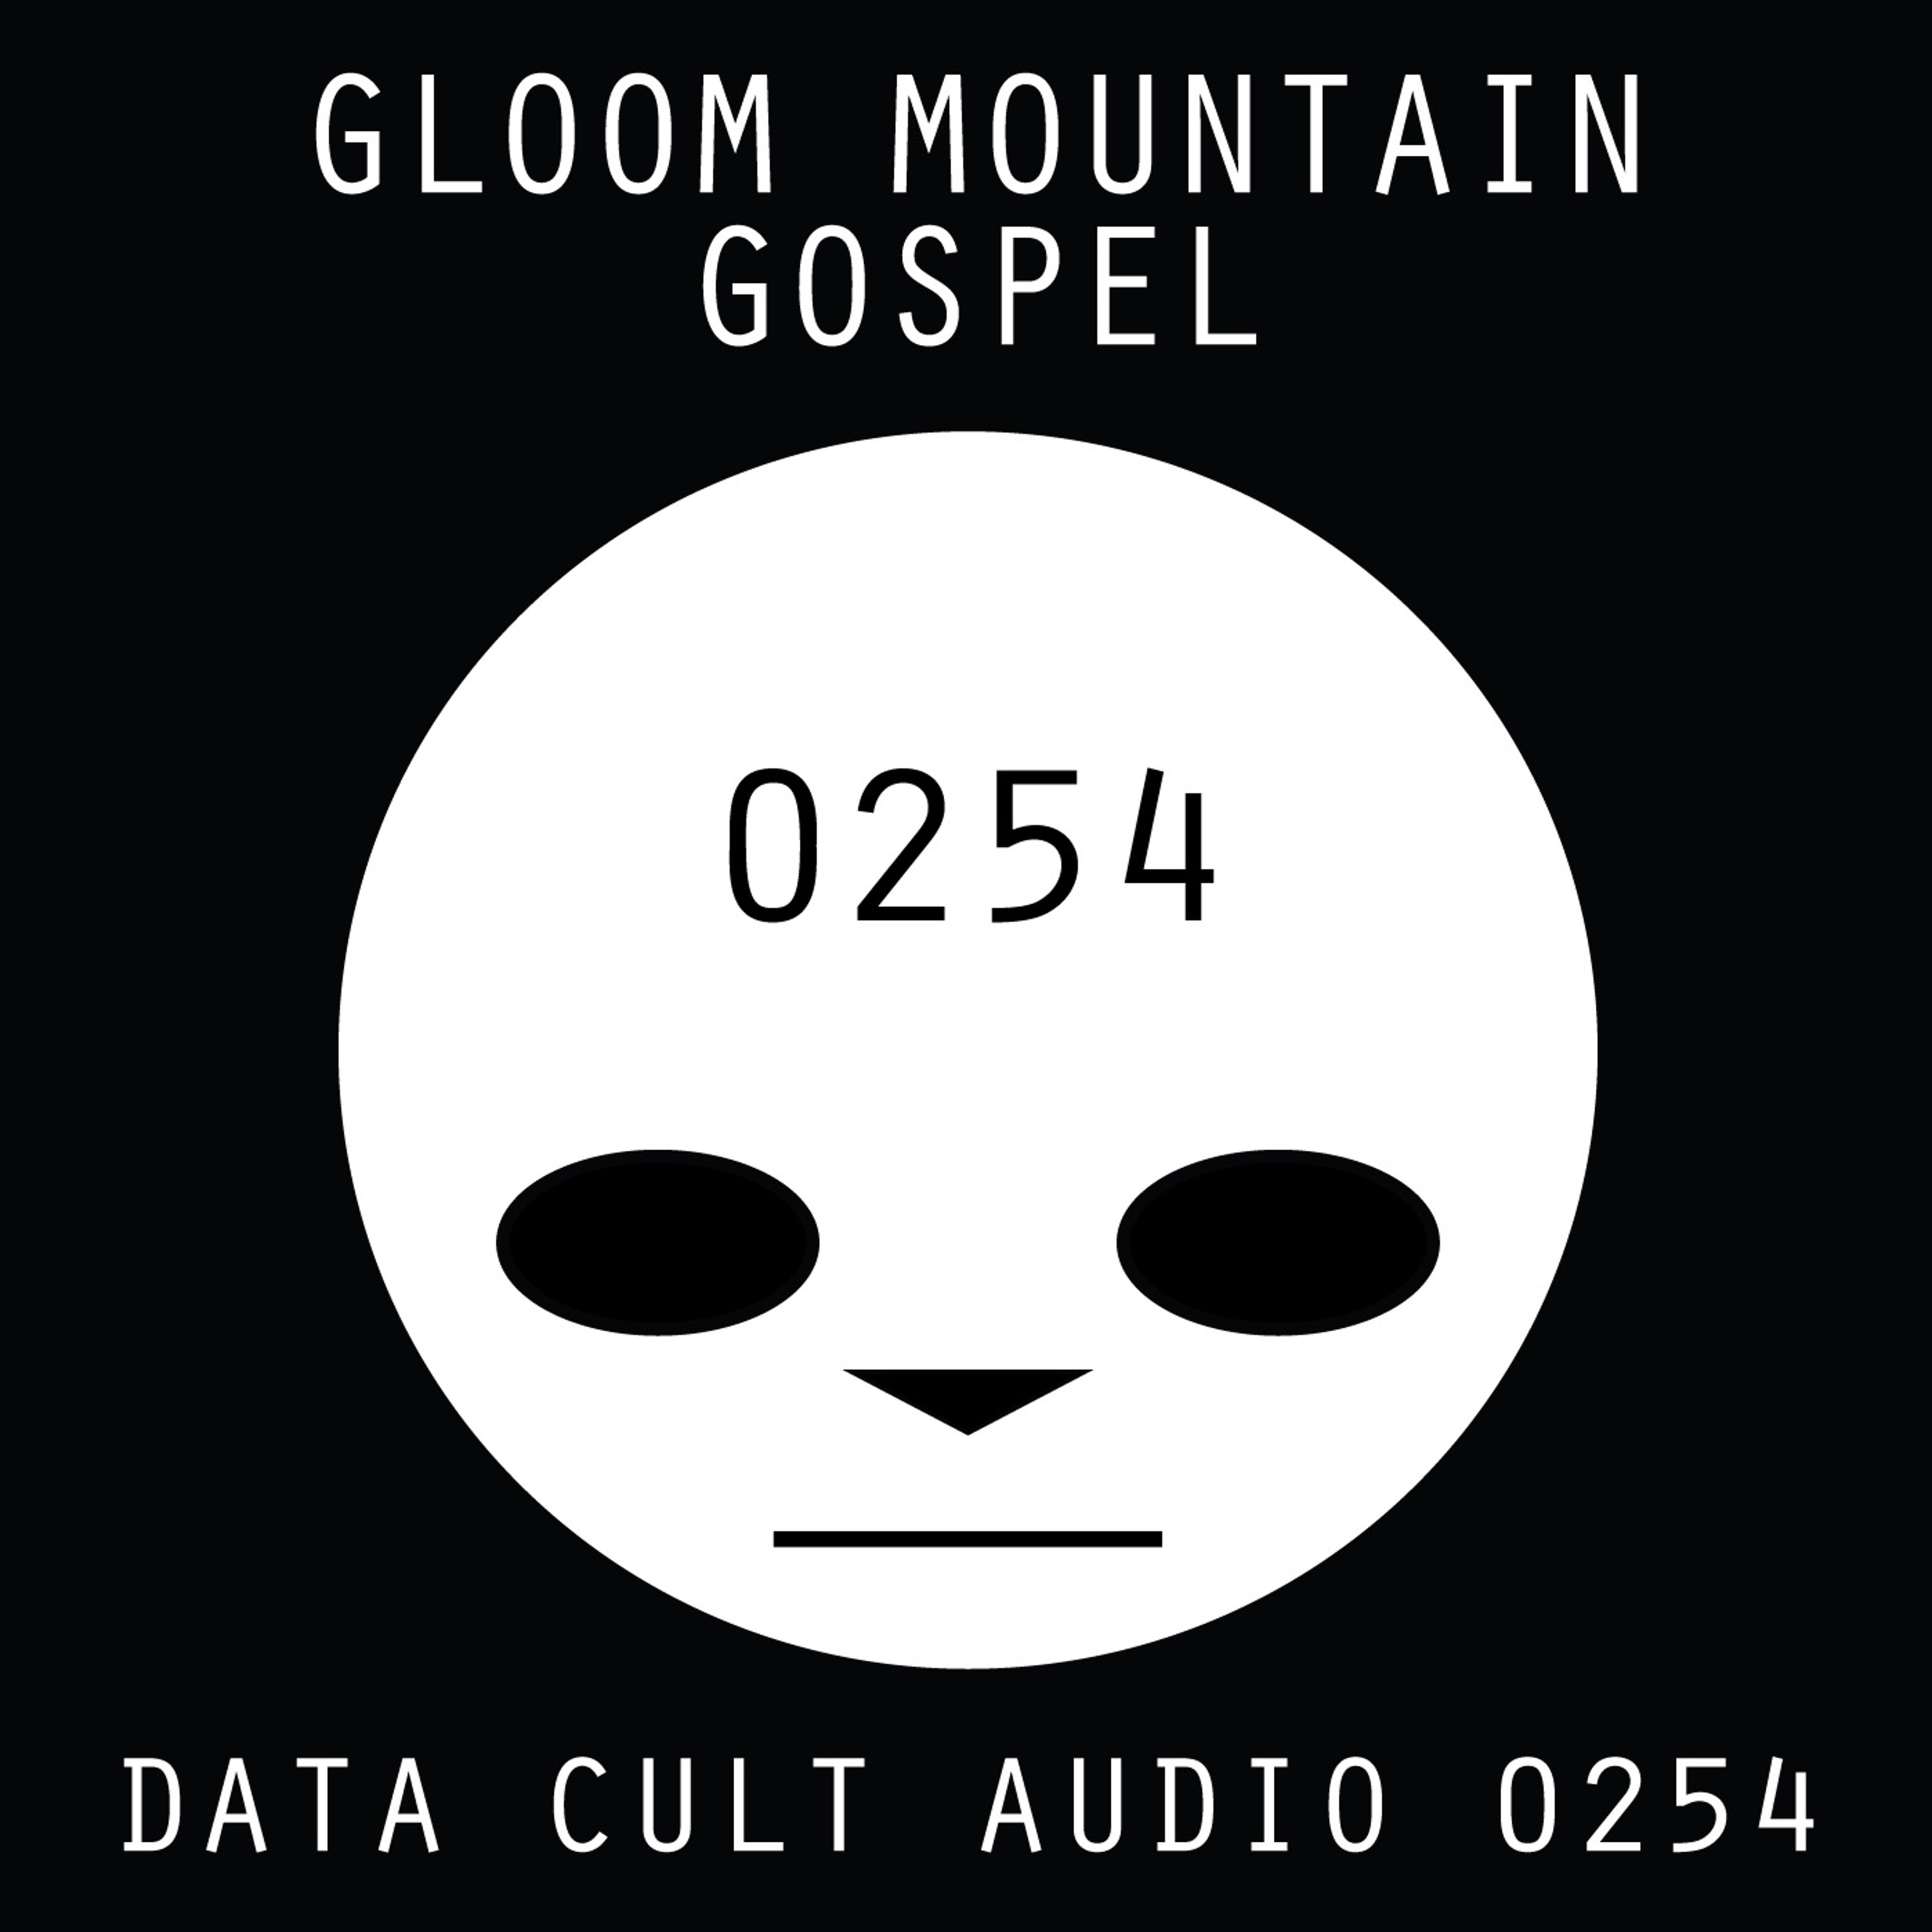 Data Cult Audio 0254 - Gloom Mountain Gospel